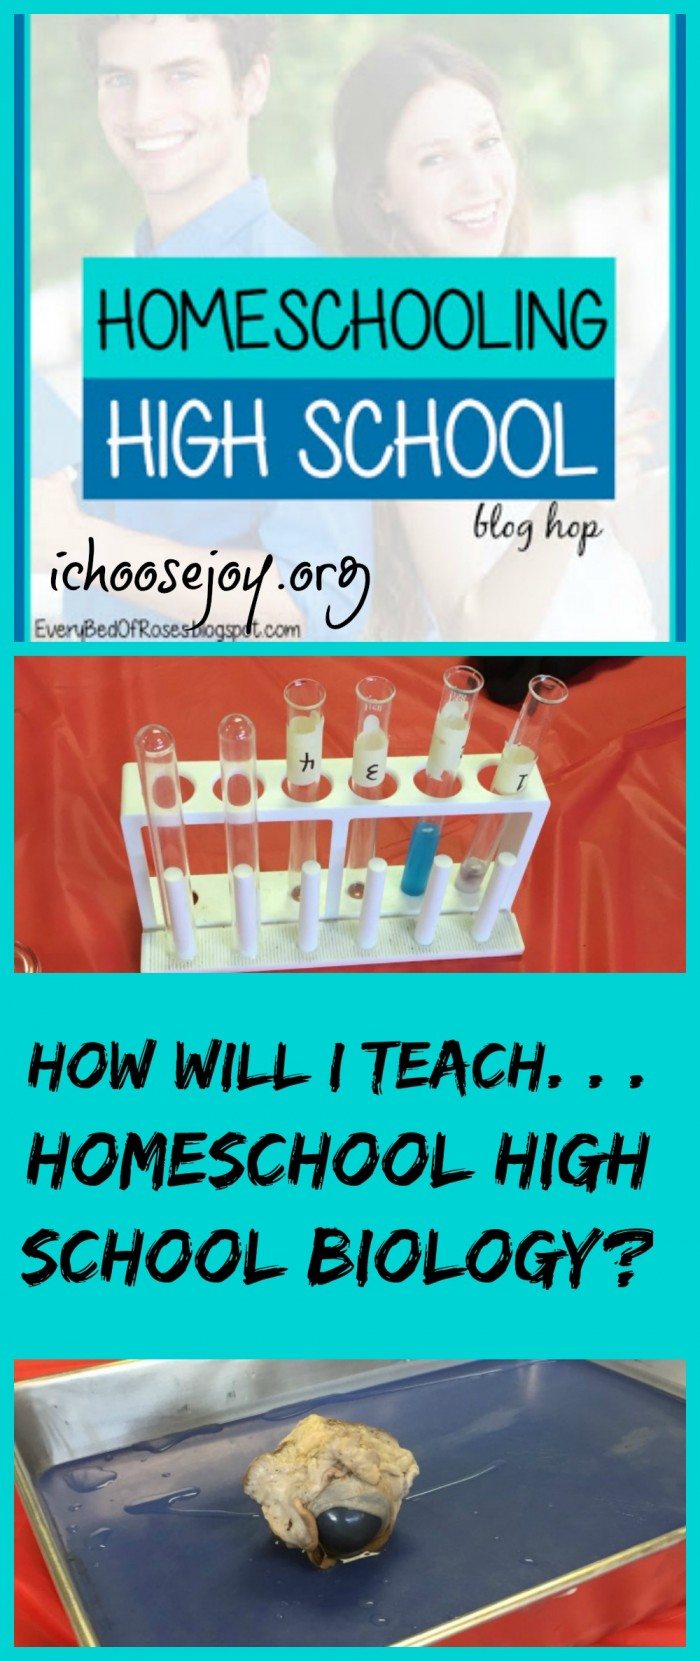 How Will I Teach Homeschool High School Biology